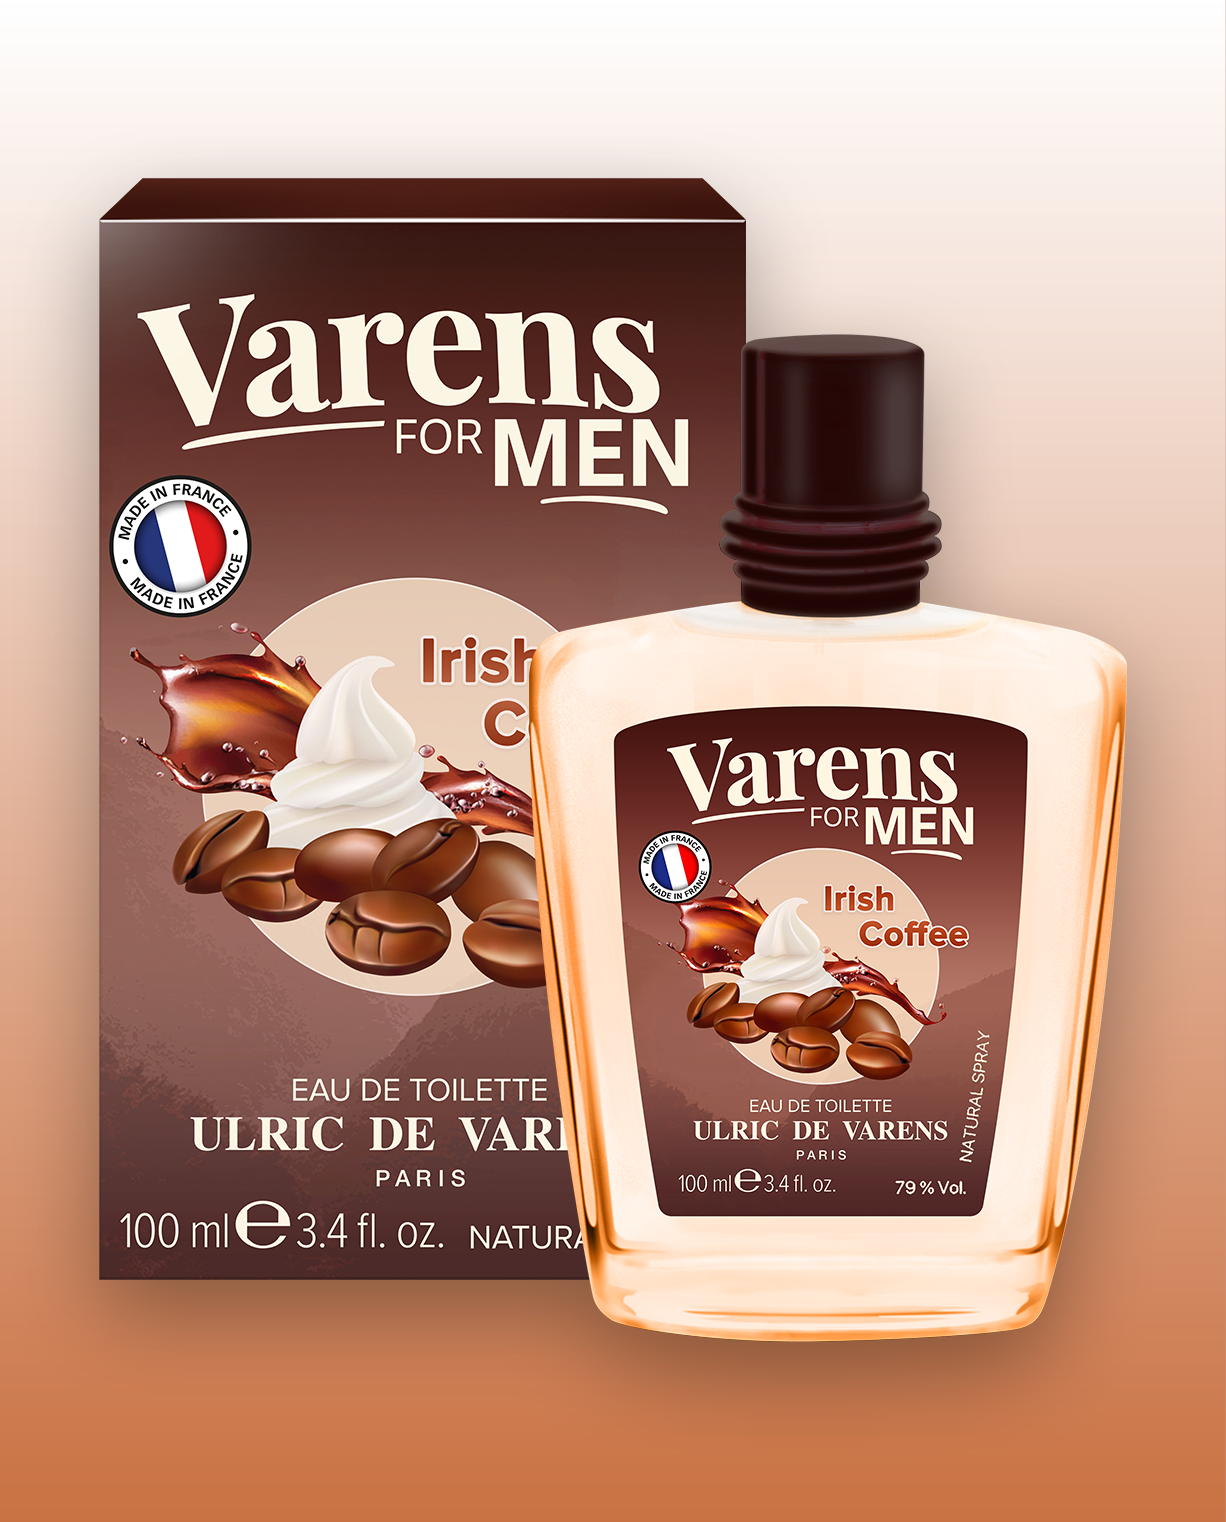 Varens For Men Irish Coffee - Ulric de Varens -  - #tag1# - #tag2# - #tag3# - #tag4#